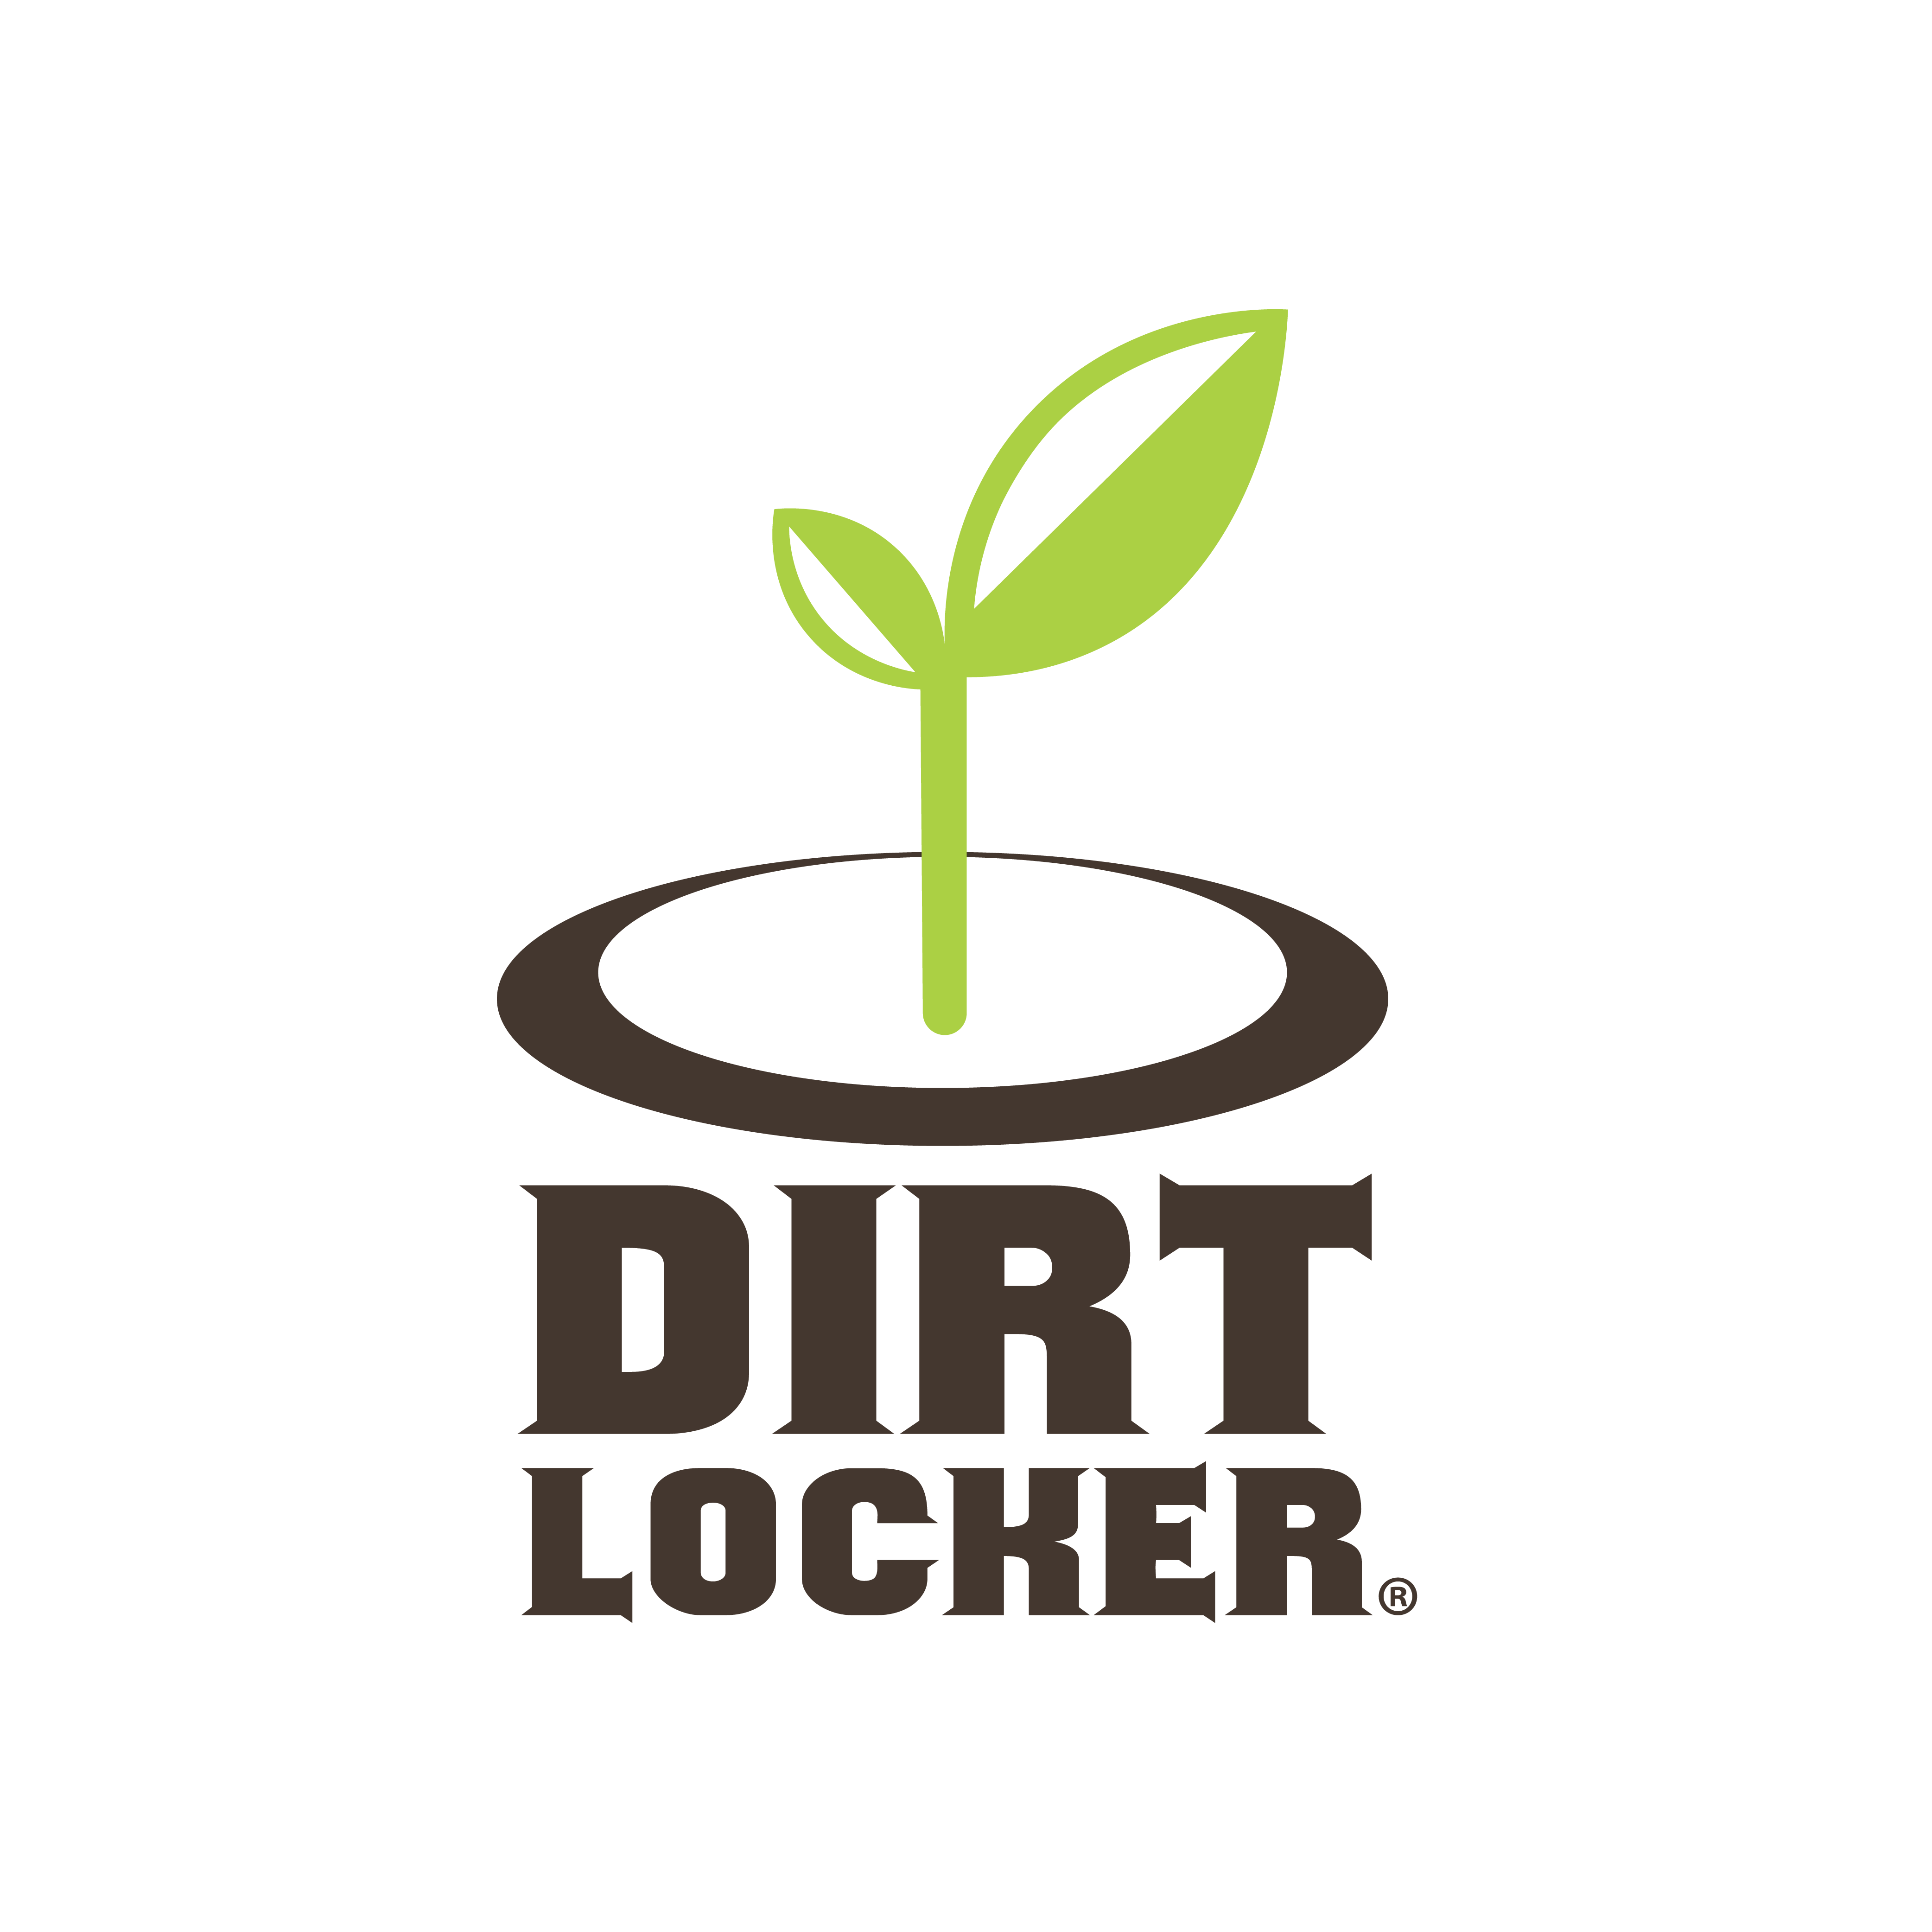 (c) Dirtlocker.com